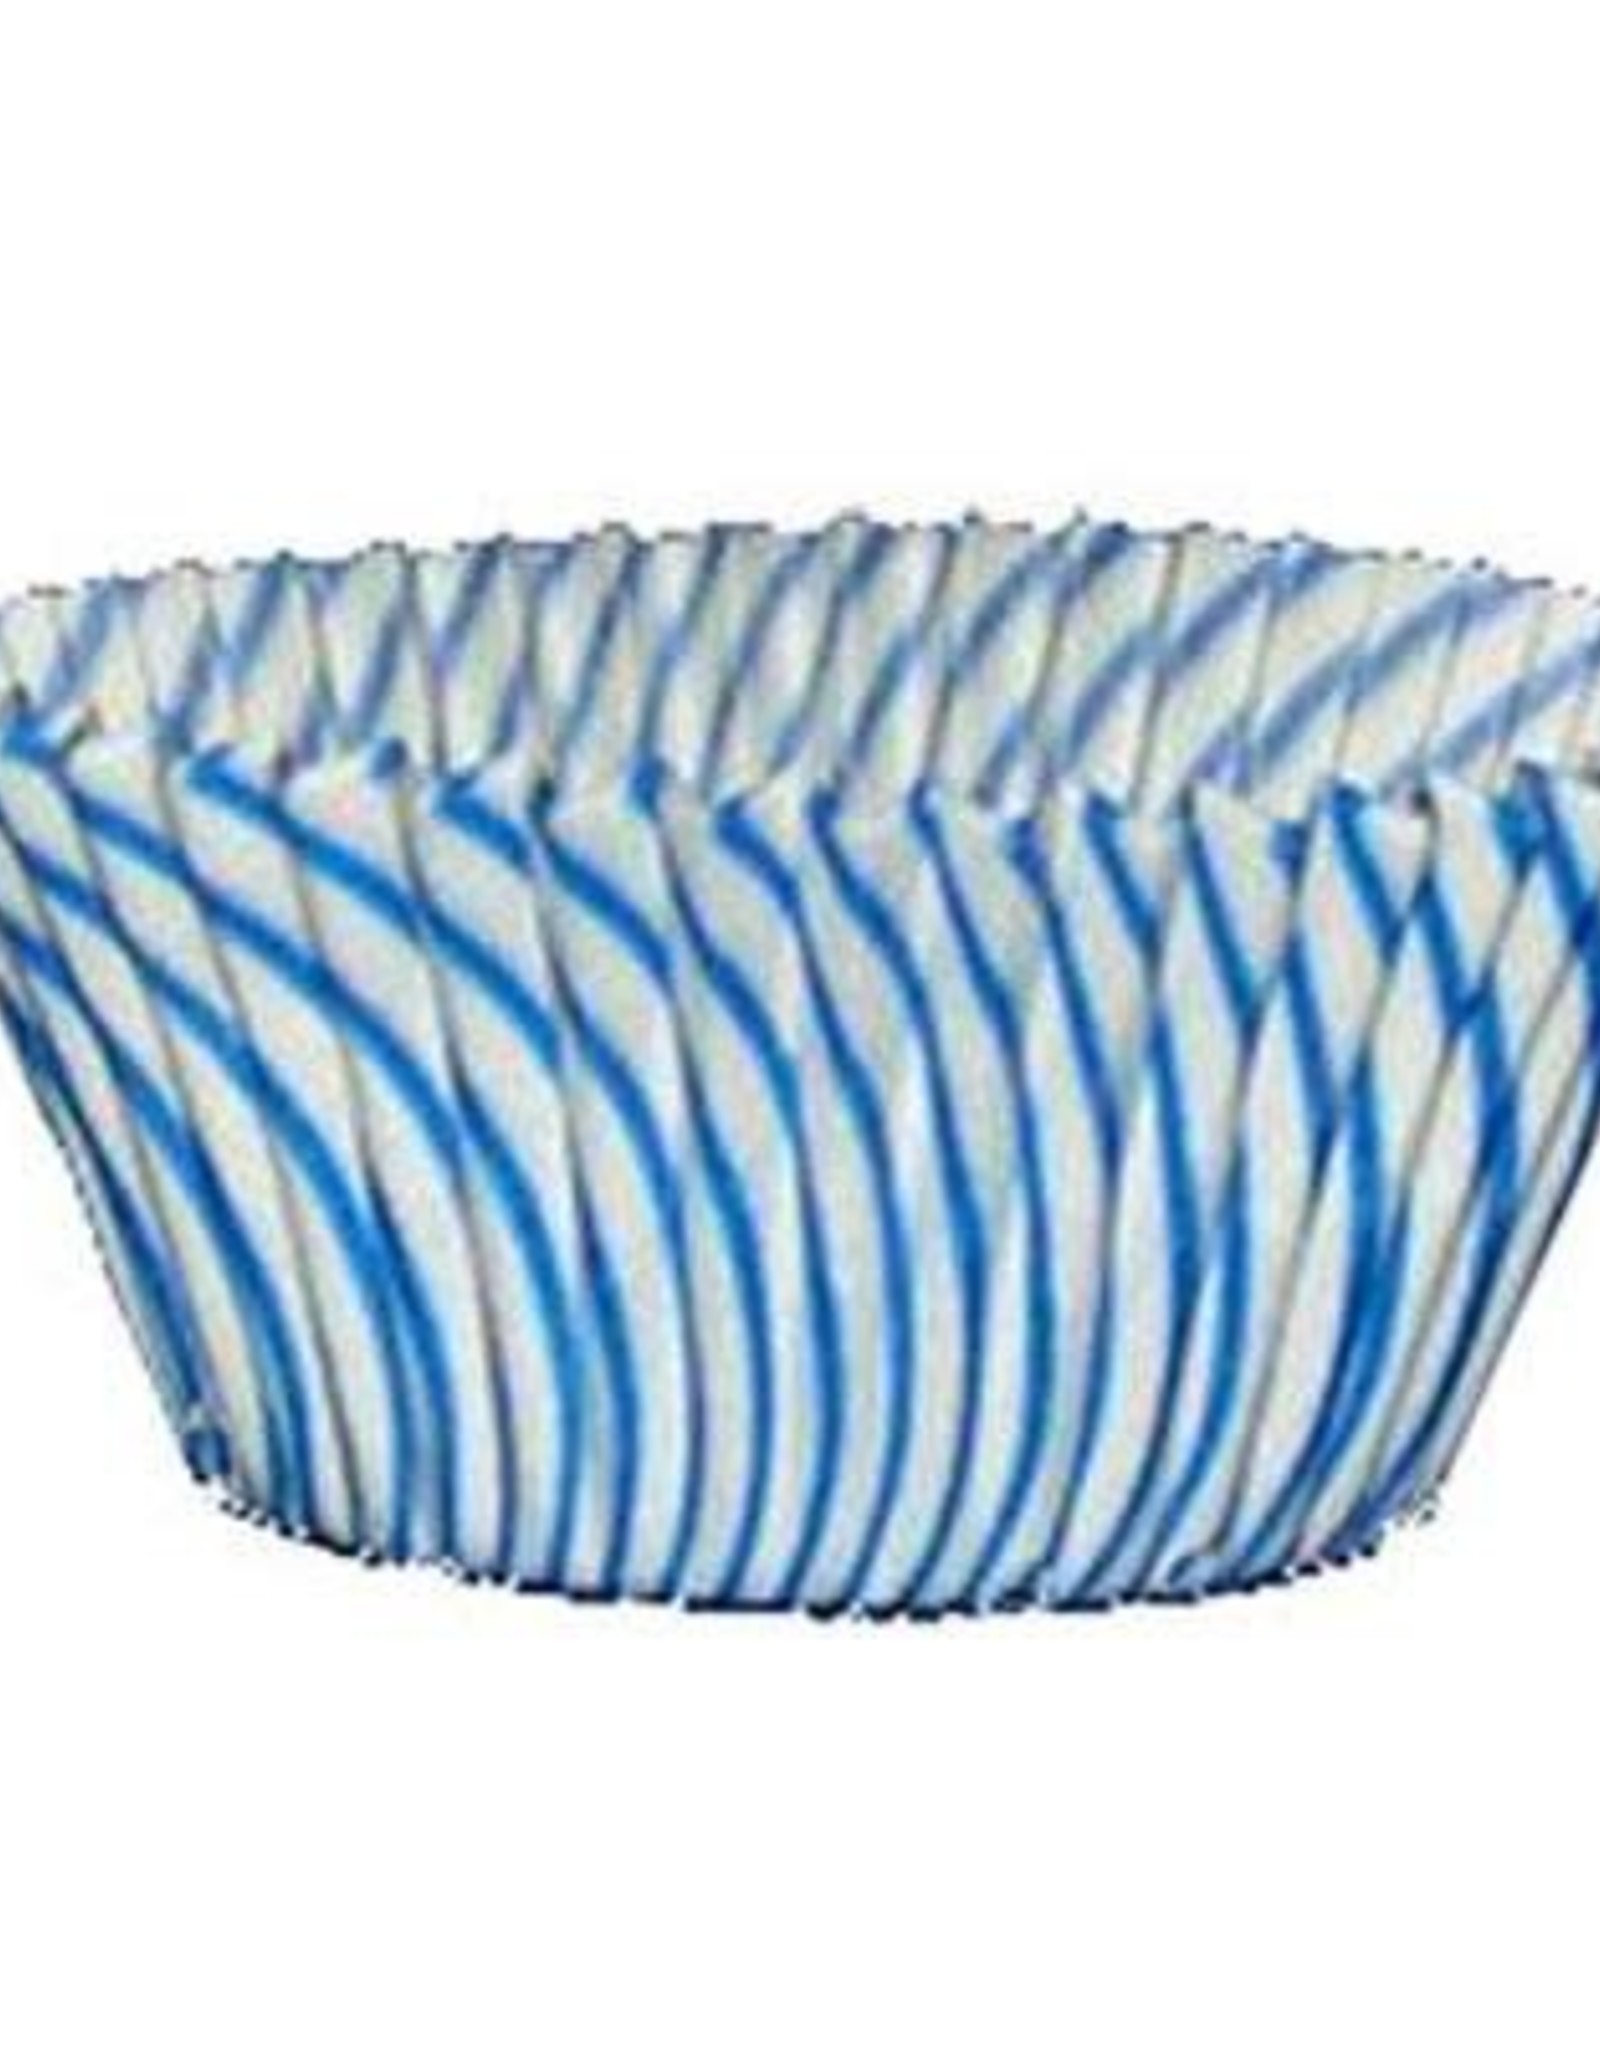 Blue Stripe Baking Cups (30-40ct)